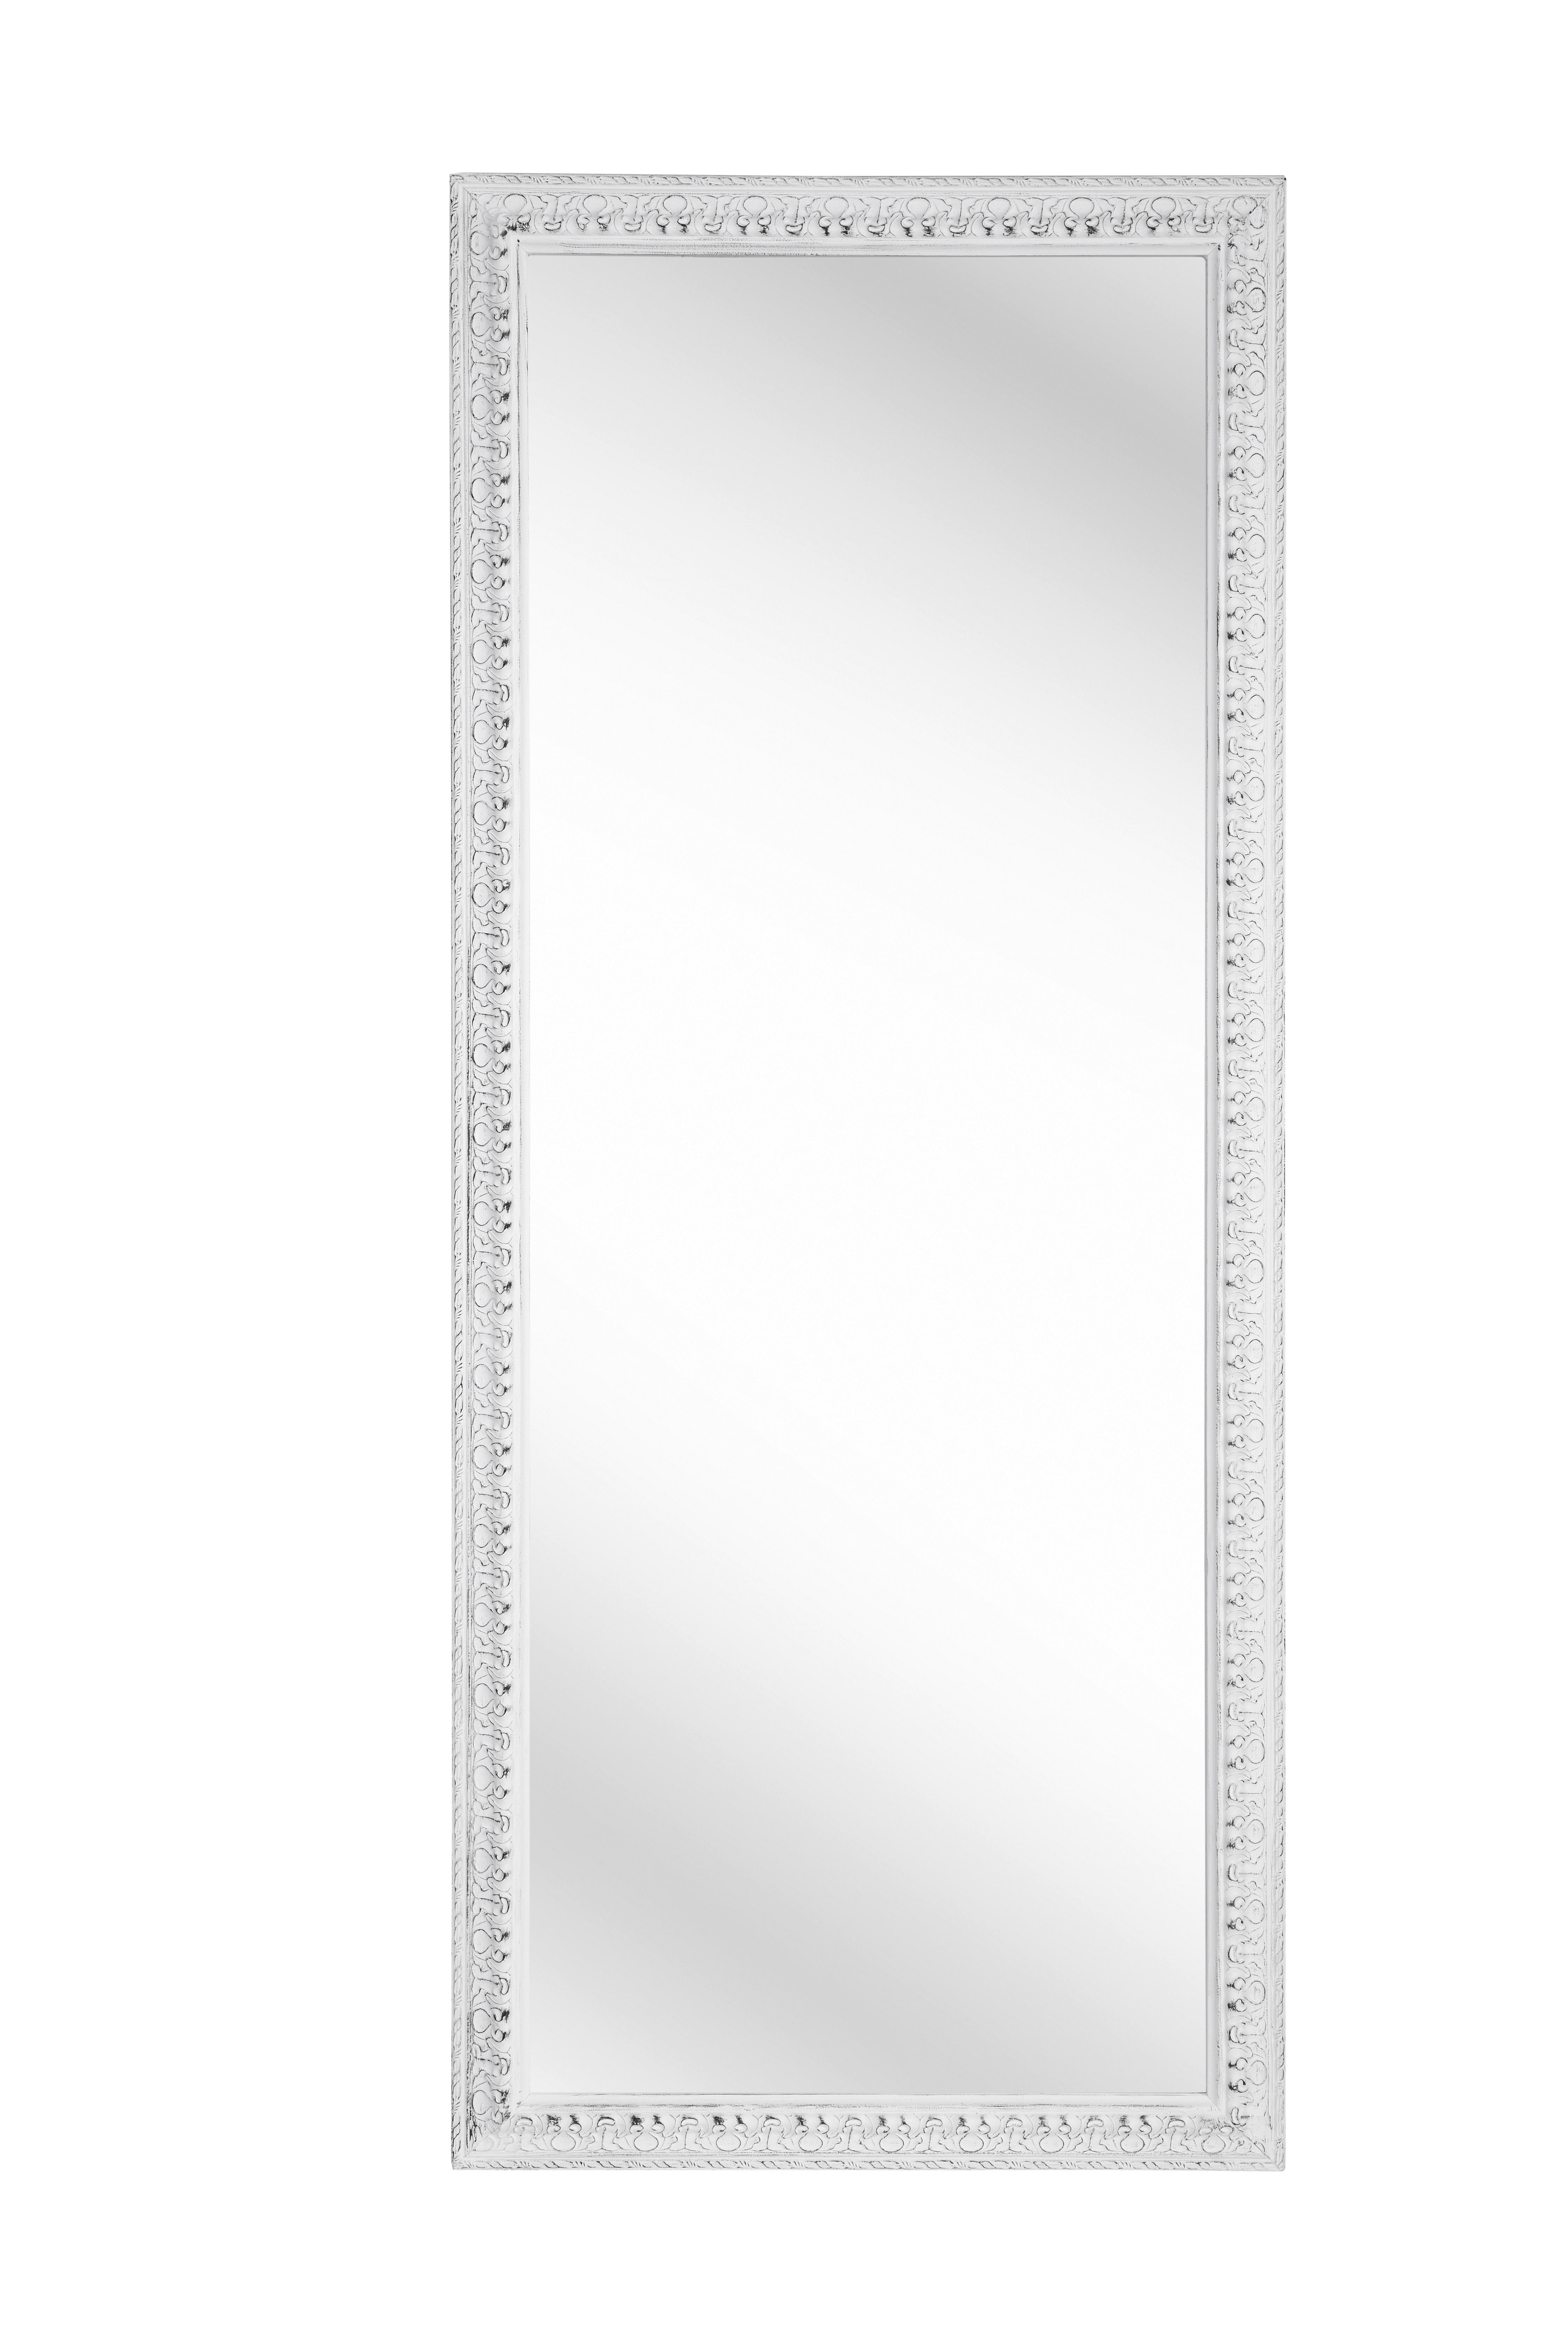 WANDSPIEGEL Weiß  - Weiß, LIFESTYLE, Glas/Holz (70/170/3cm) - Carryhome